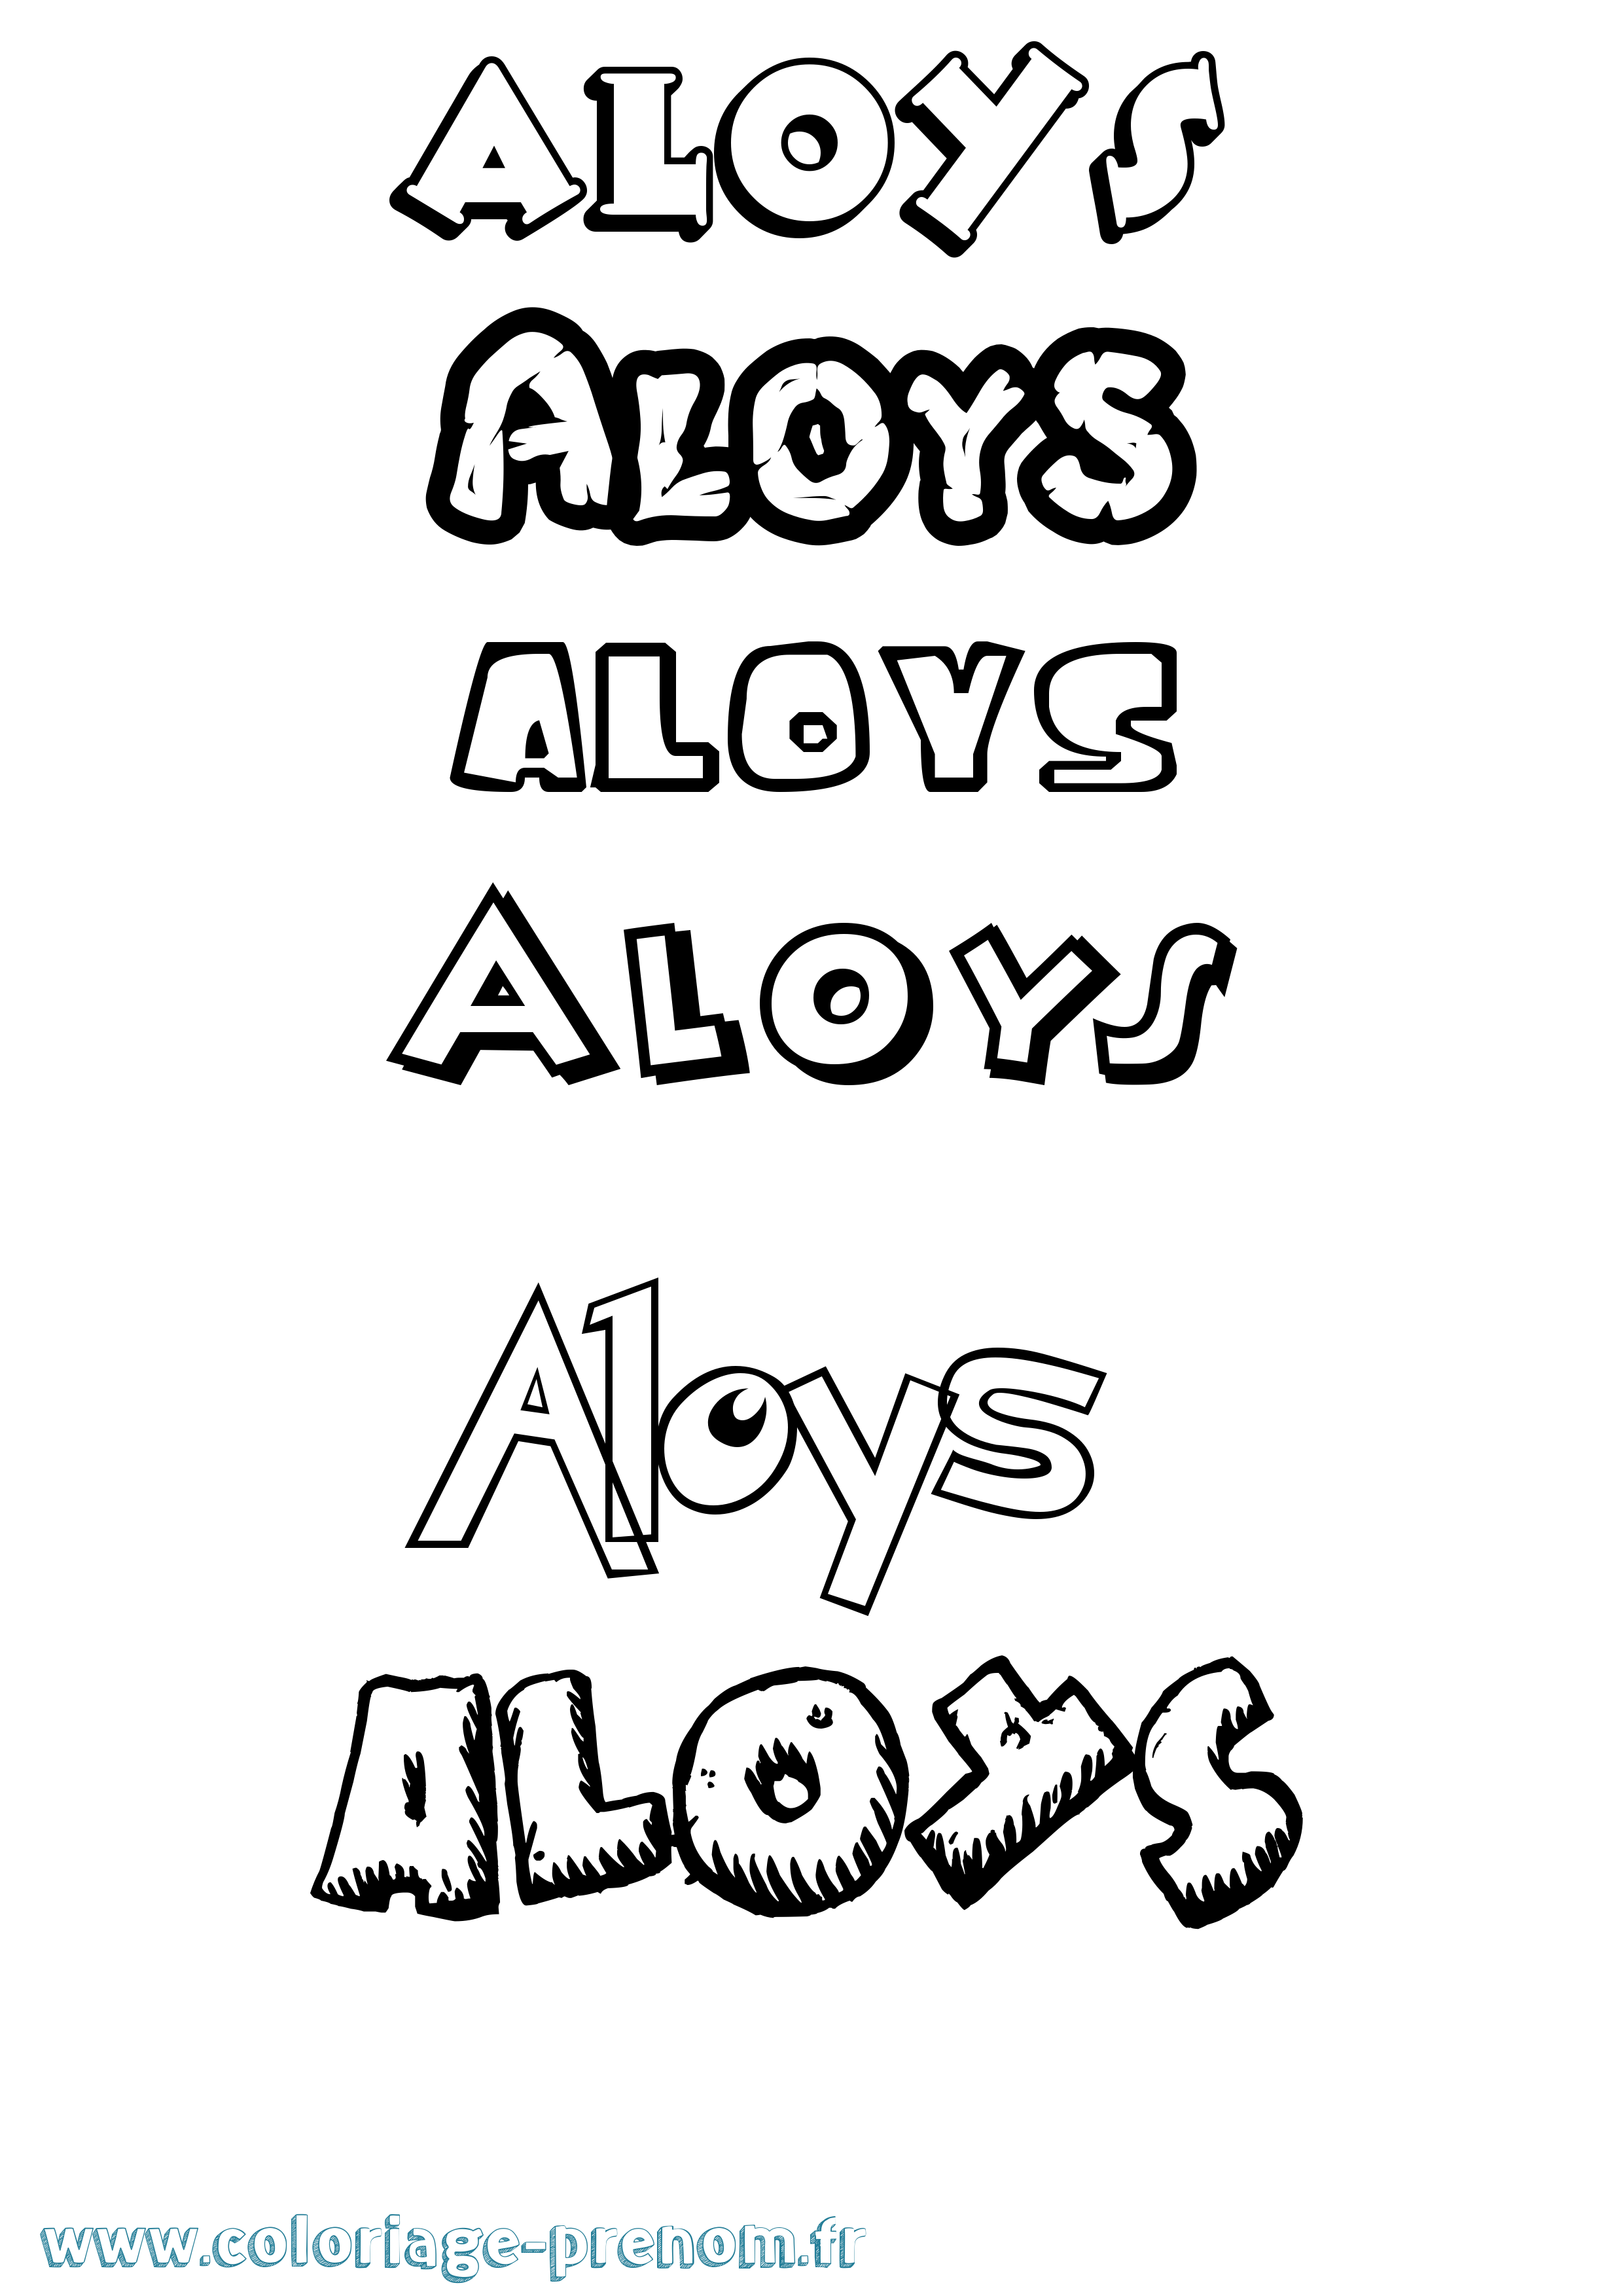 Coloriage prénom Aloys